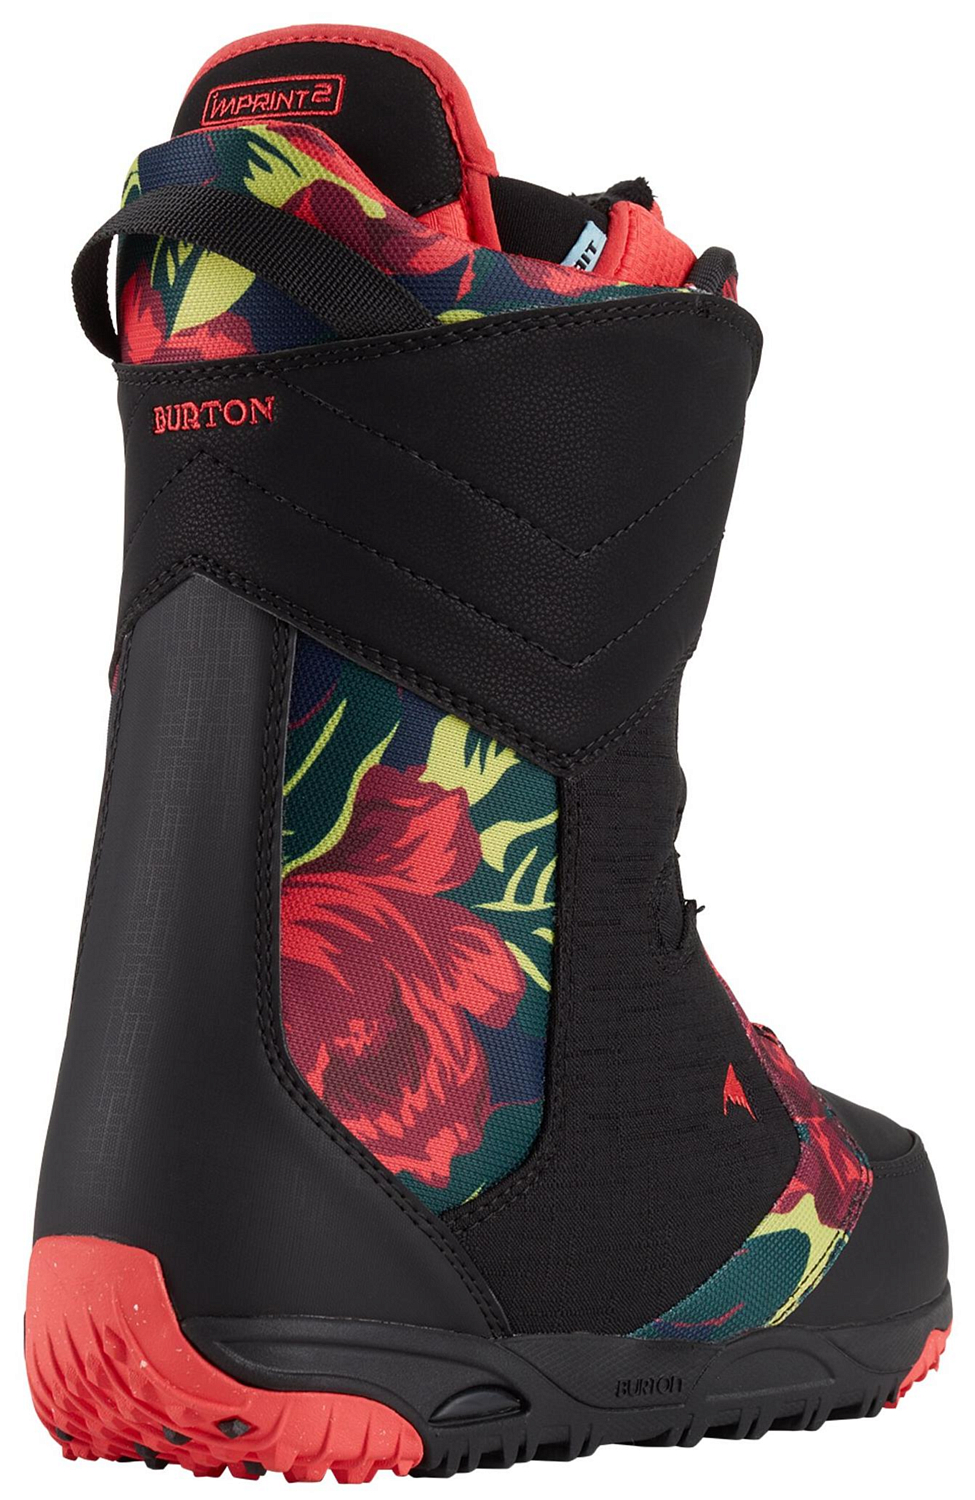 Ботинки для сноуборда BURTON 2020-21 Limelight Boa Black/Floral